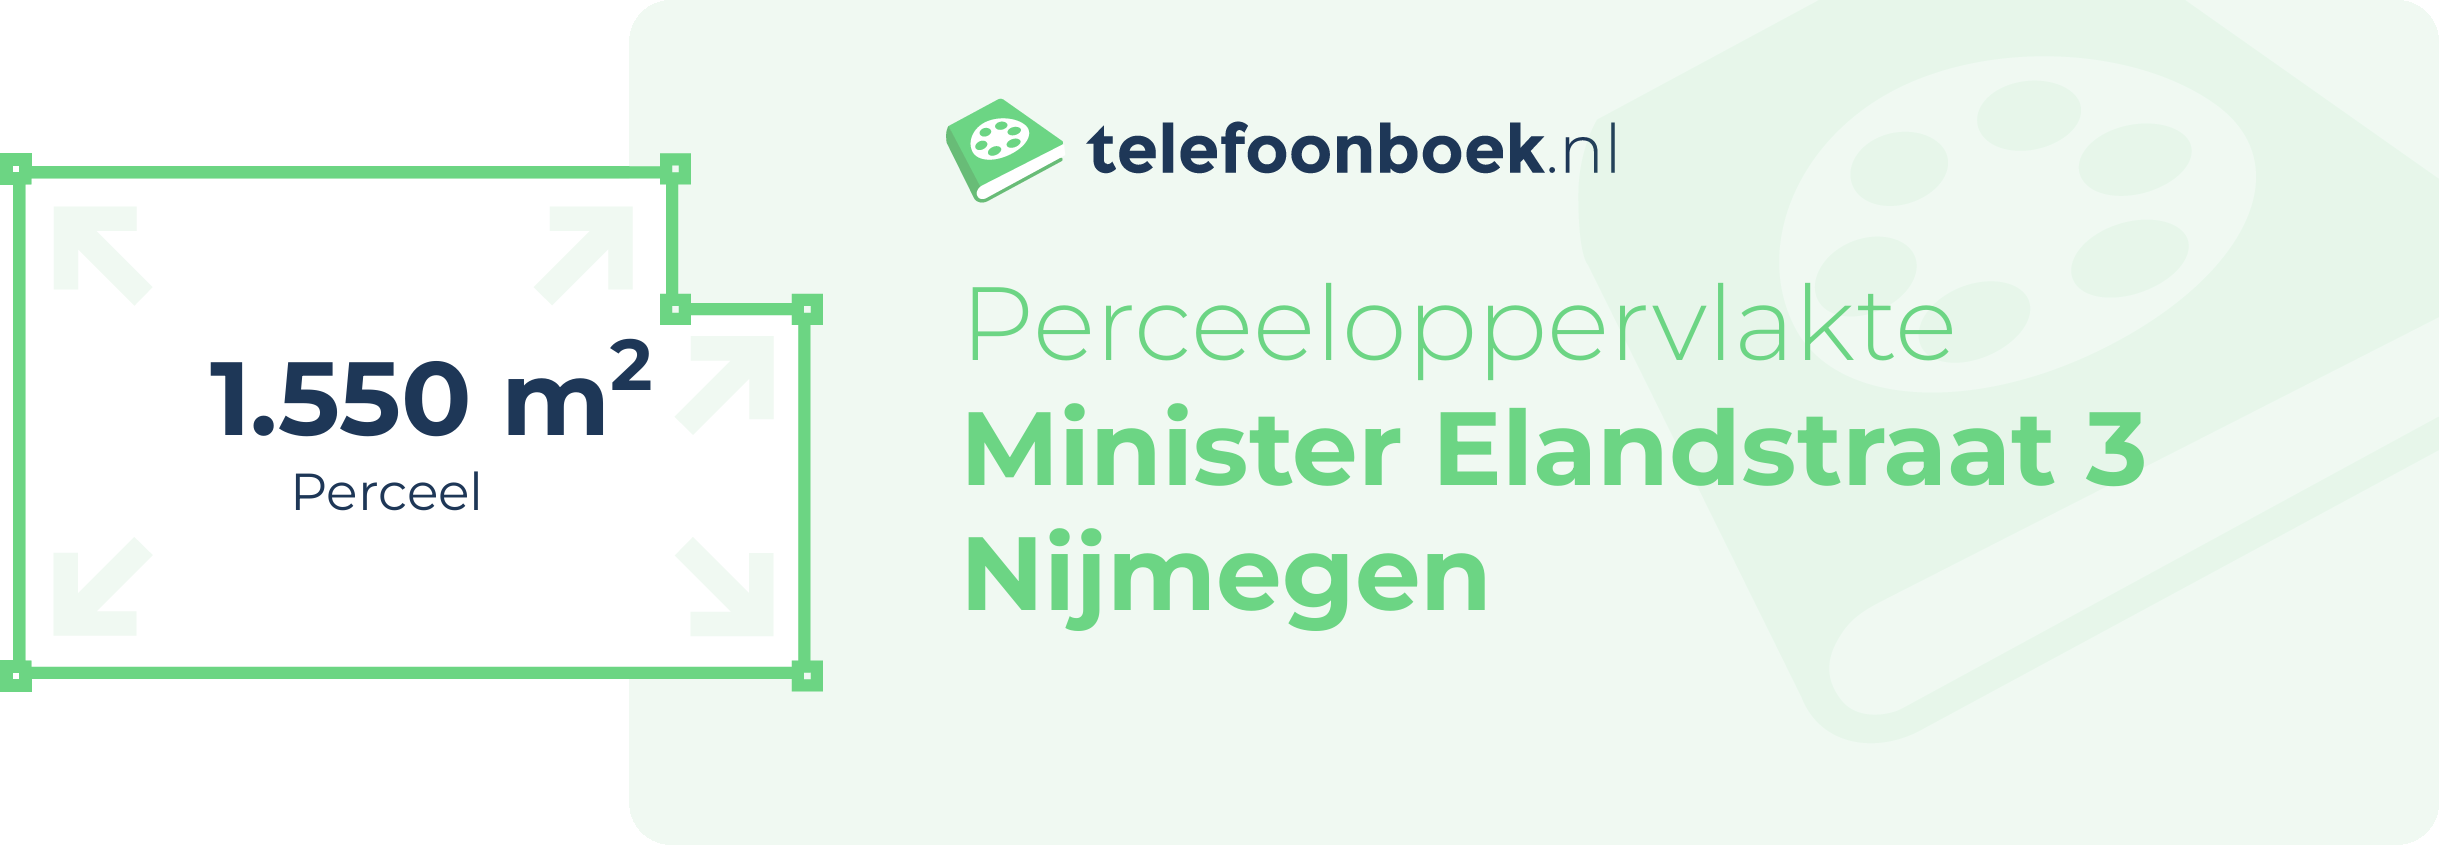 Perceeloppervlakte Minister Elandstraat 3 Nijmegen